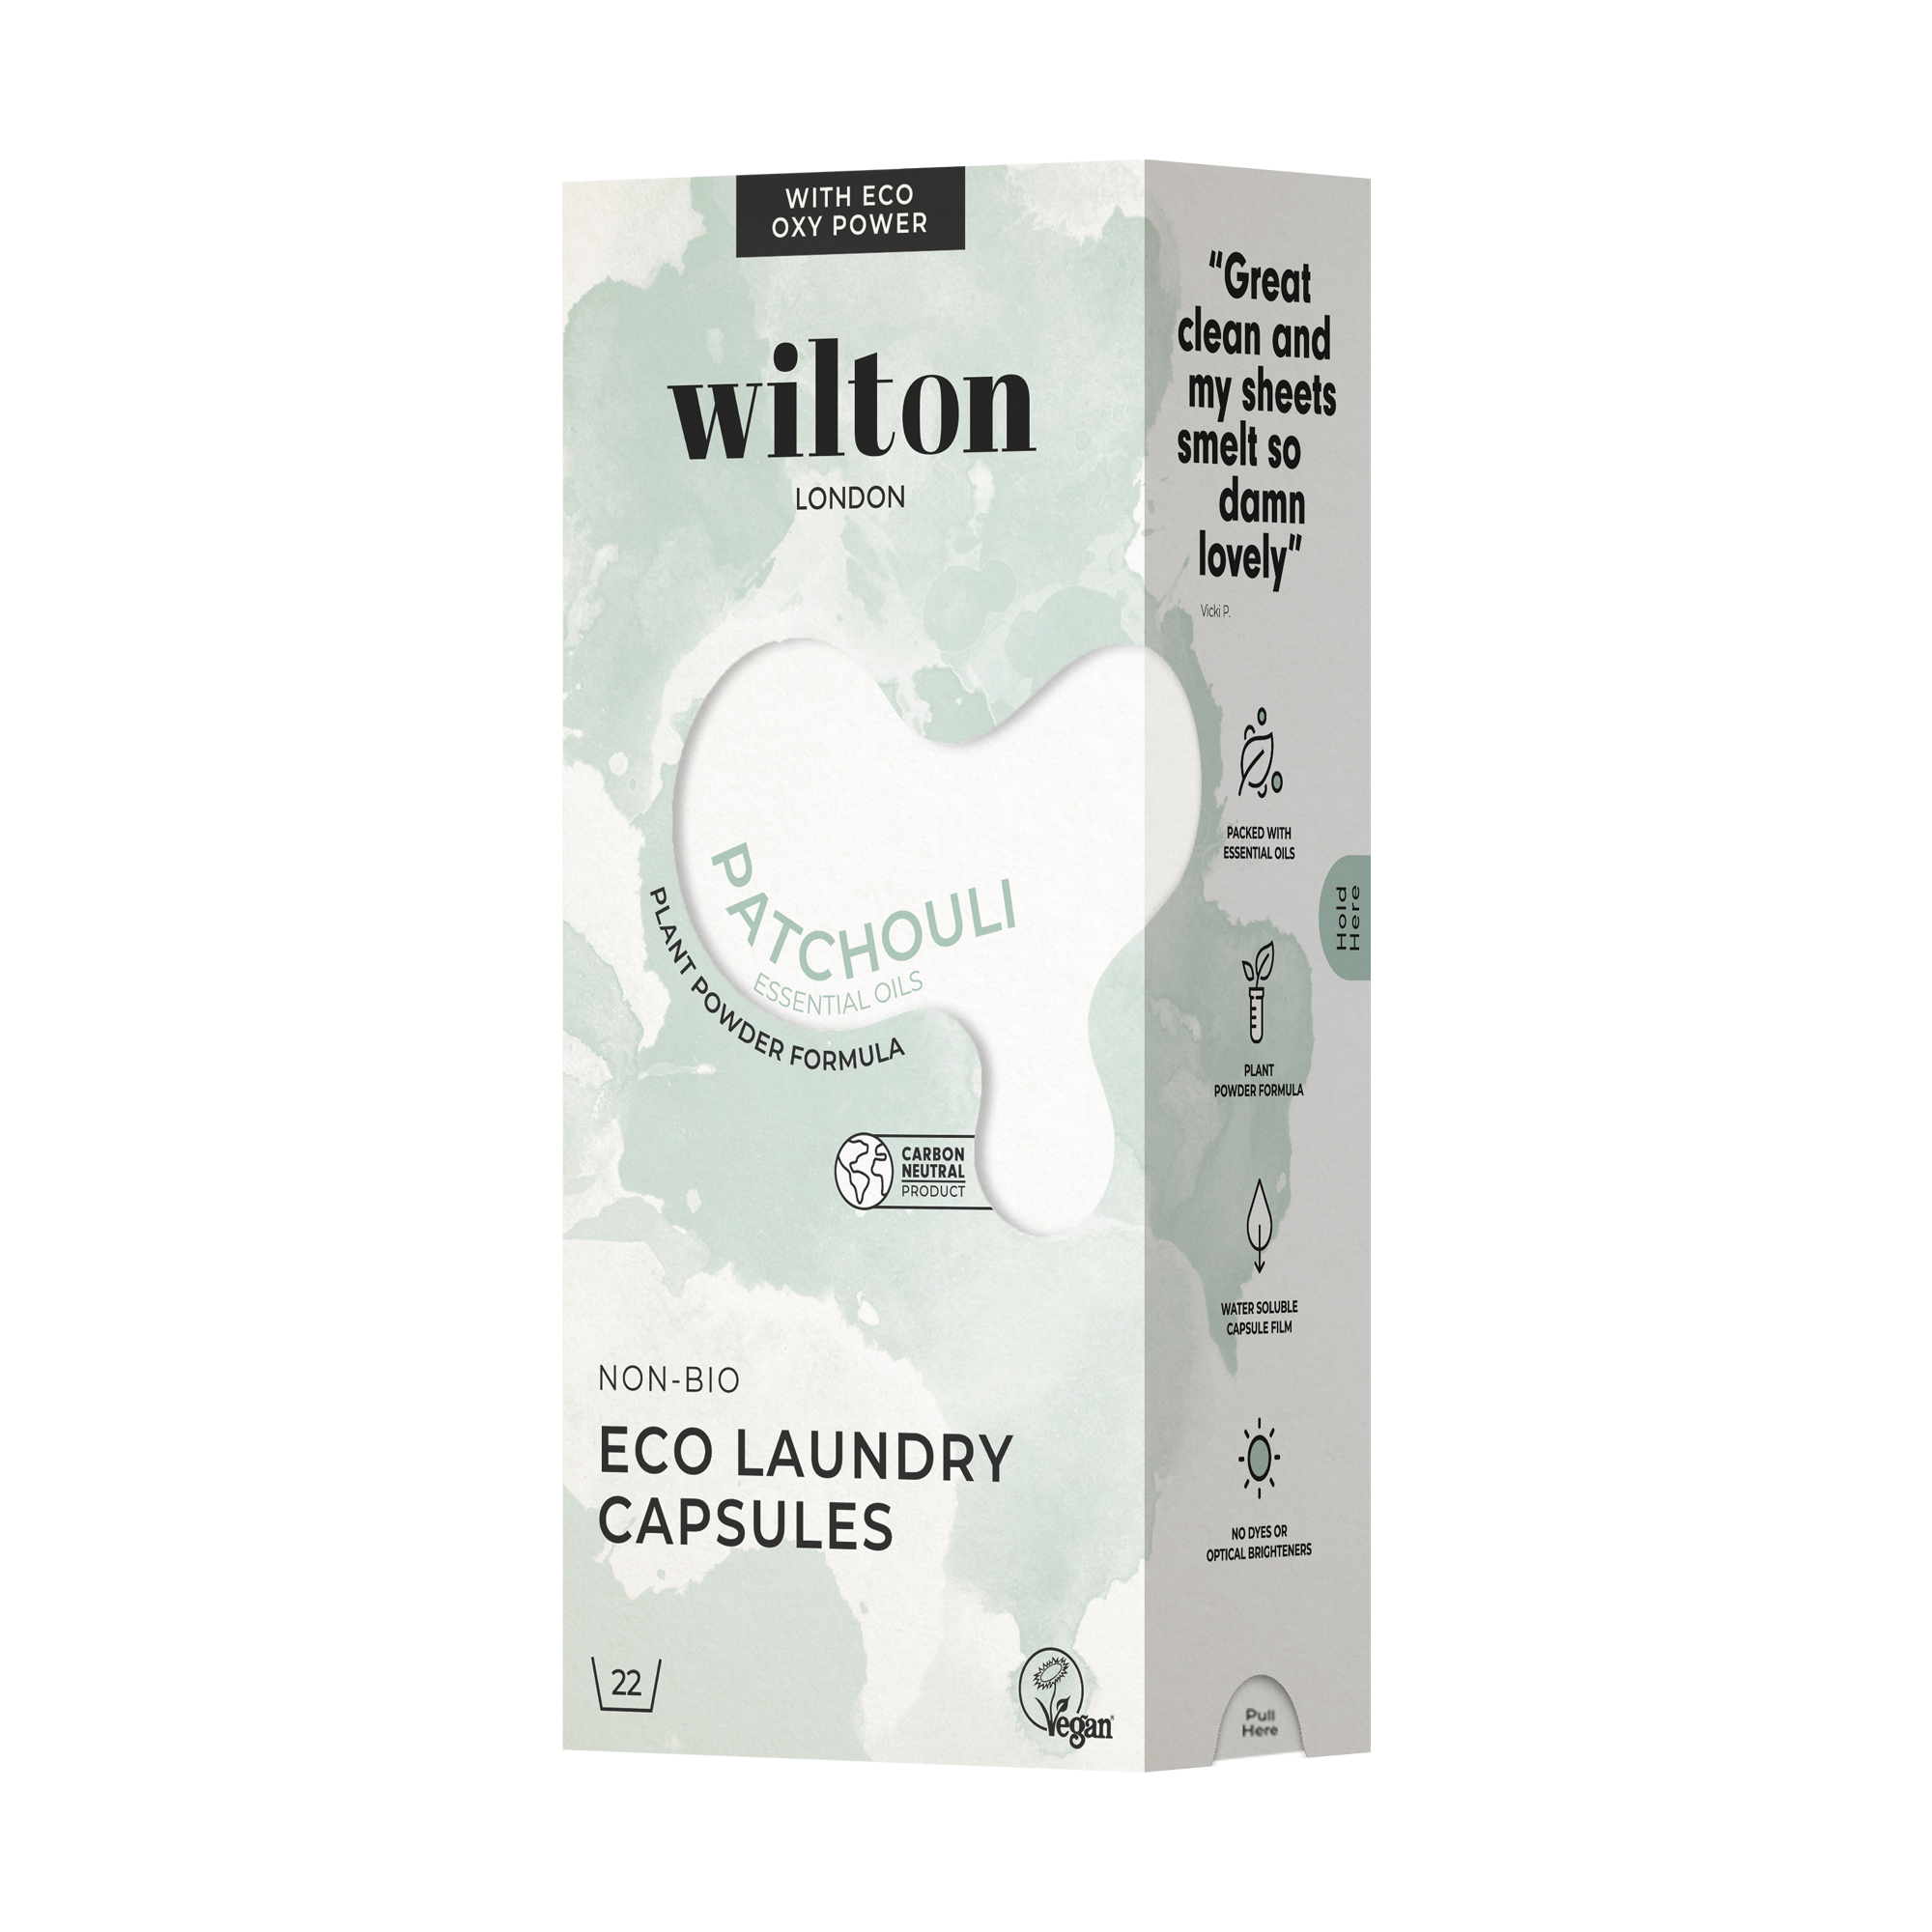 Wilton London debuts New Plant-Powder Eco Laundry Capsule